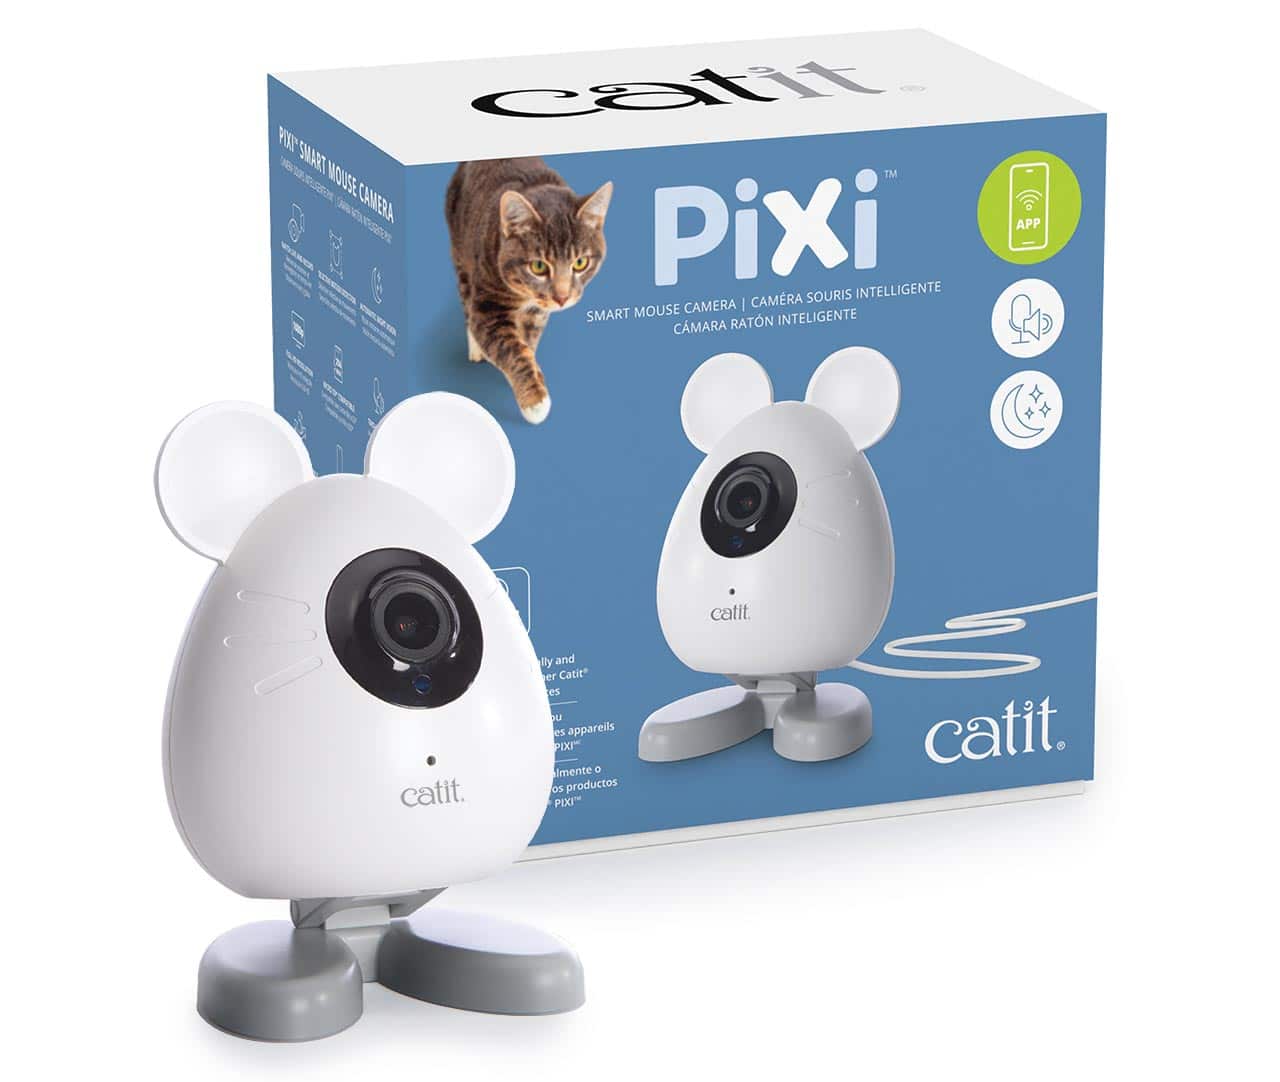 Emballage de la caméra-souris intelligente Catit PIXI